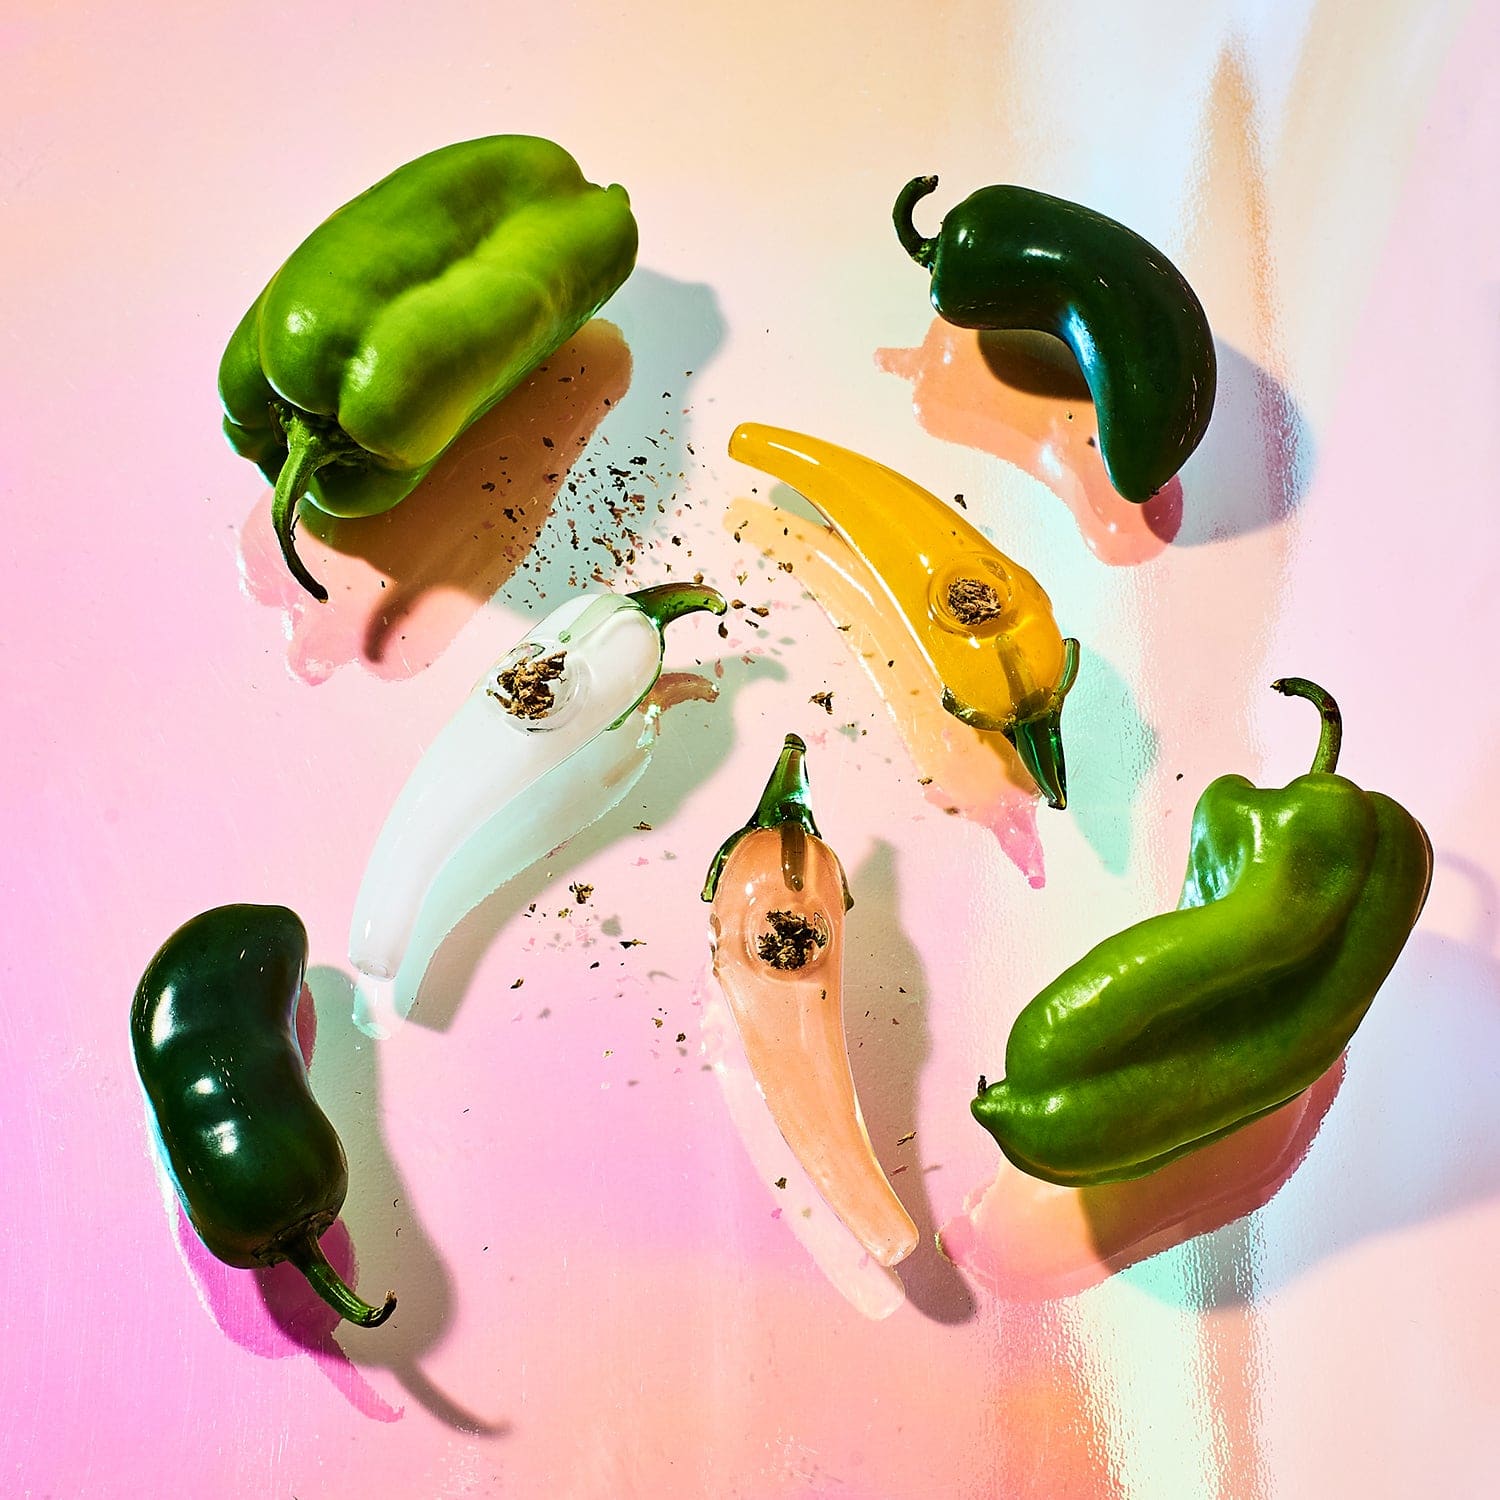 Chili Pepper Spoon 420smoke - Food Novelty